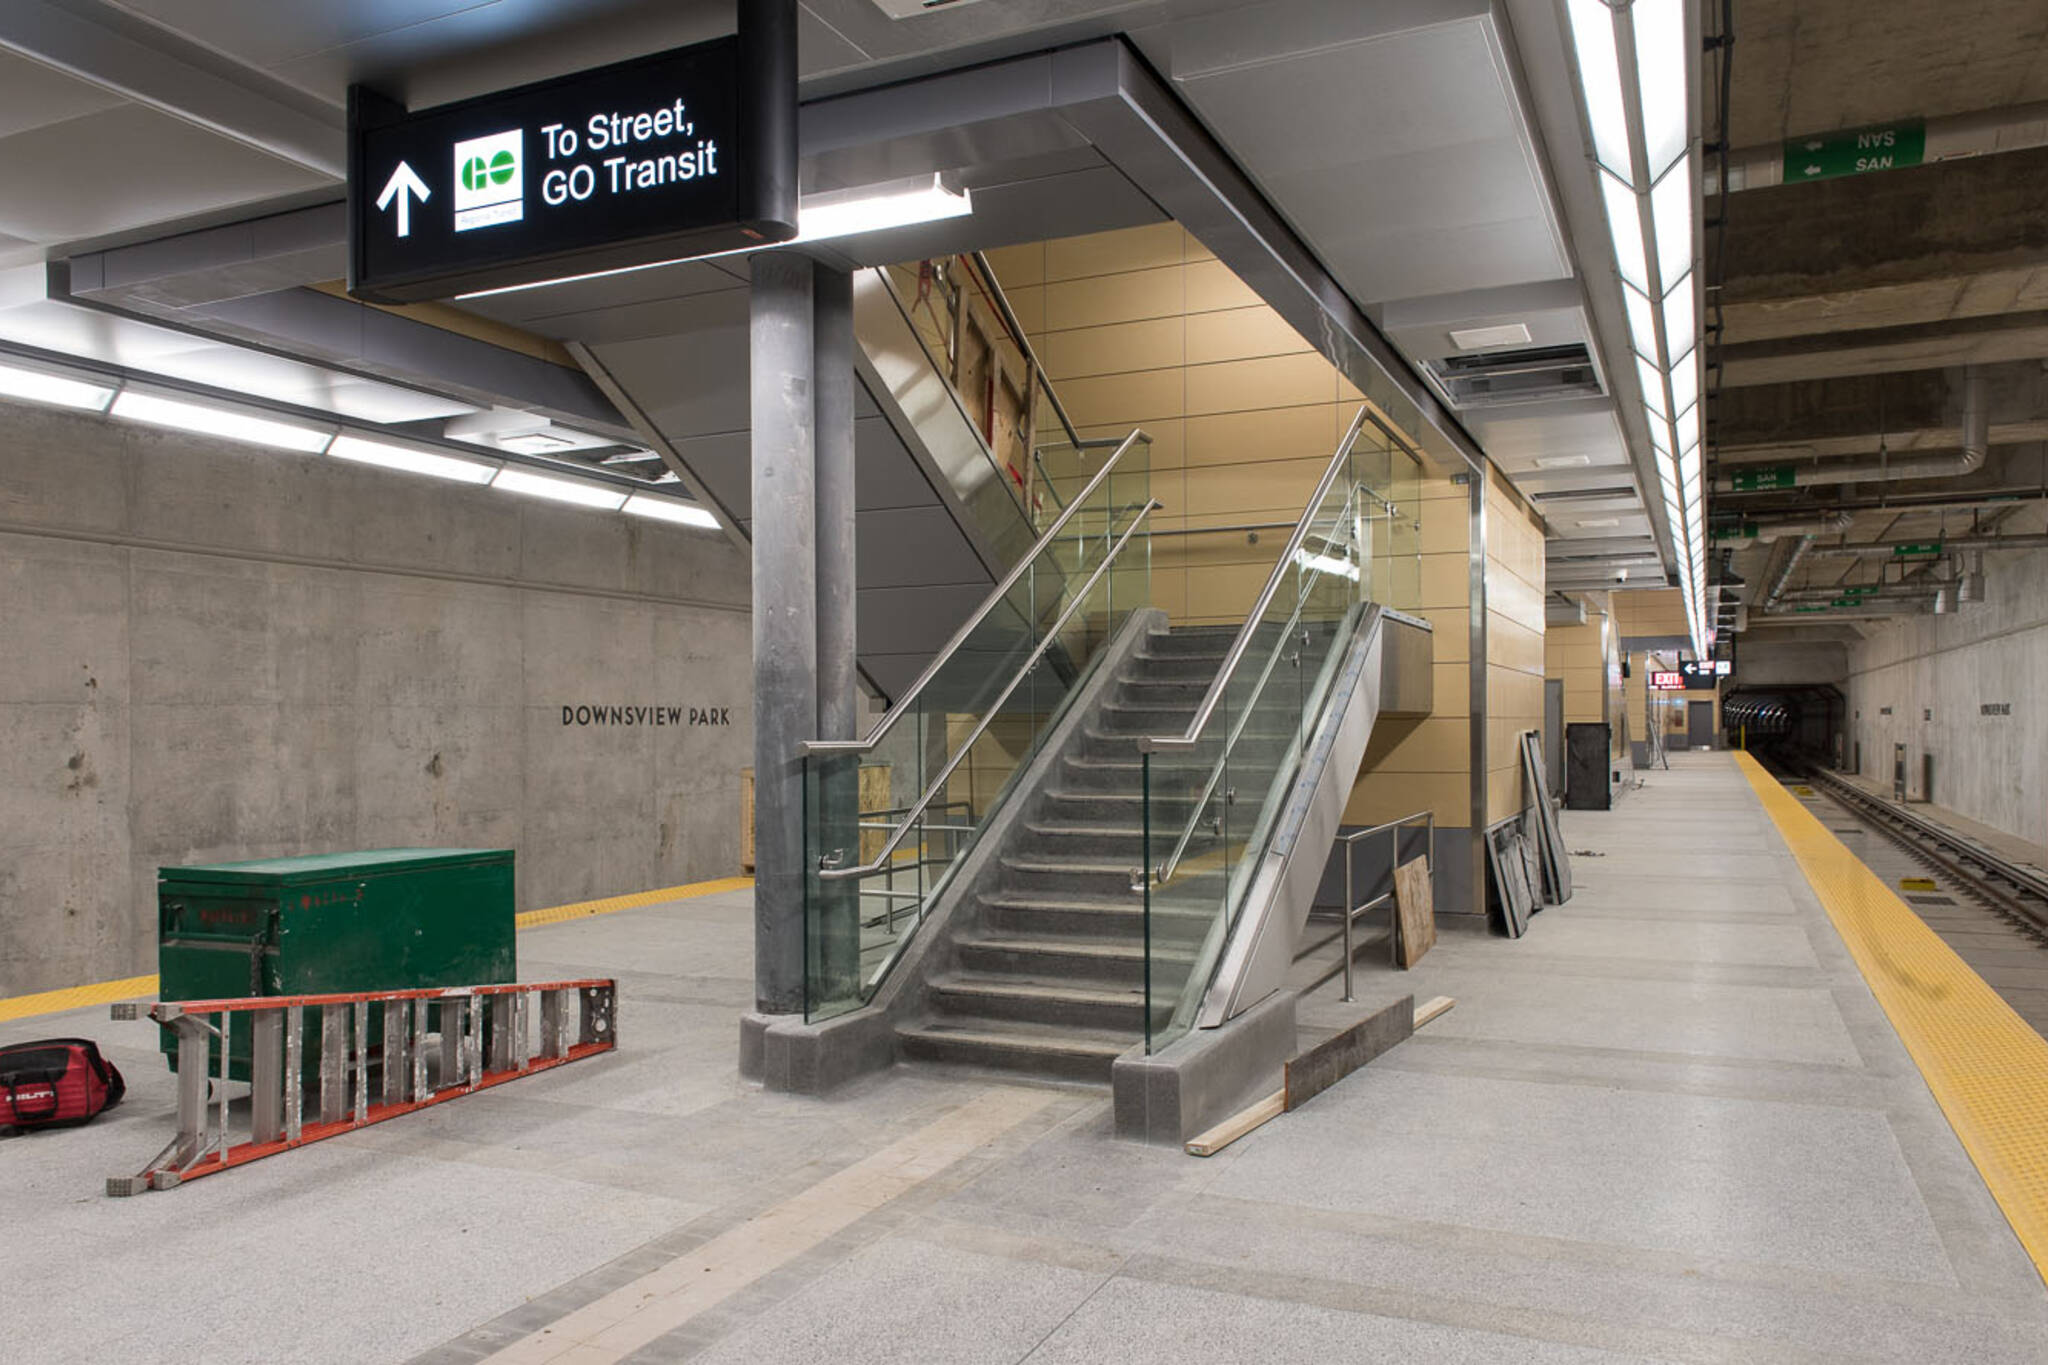 ttc subway station